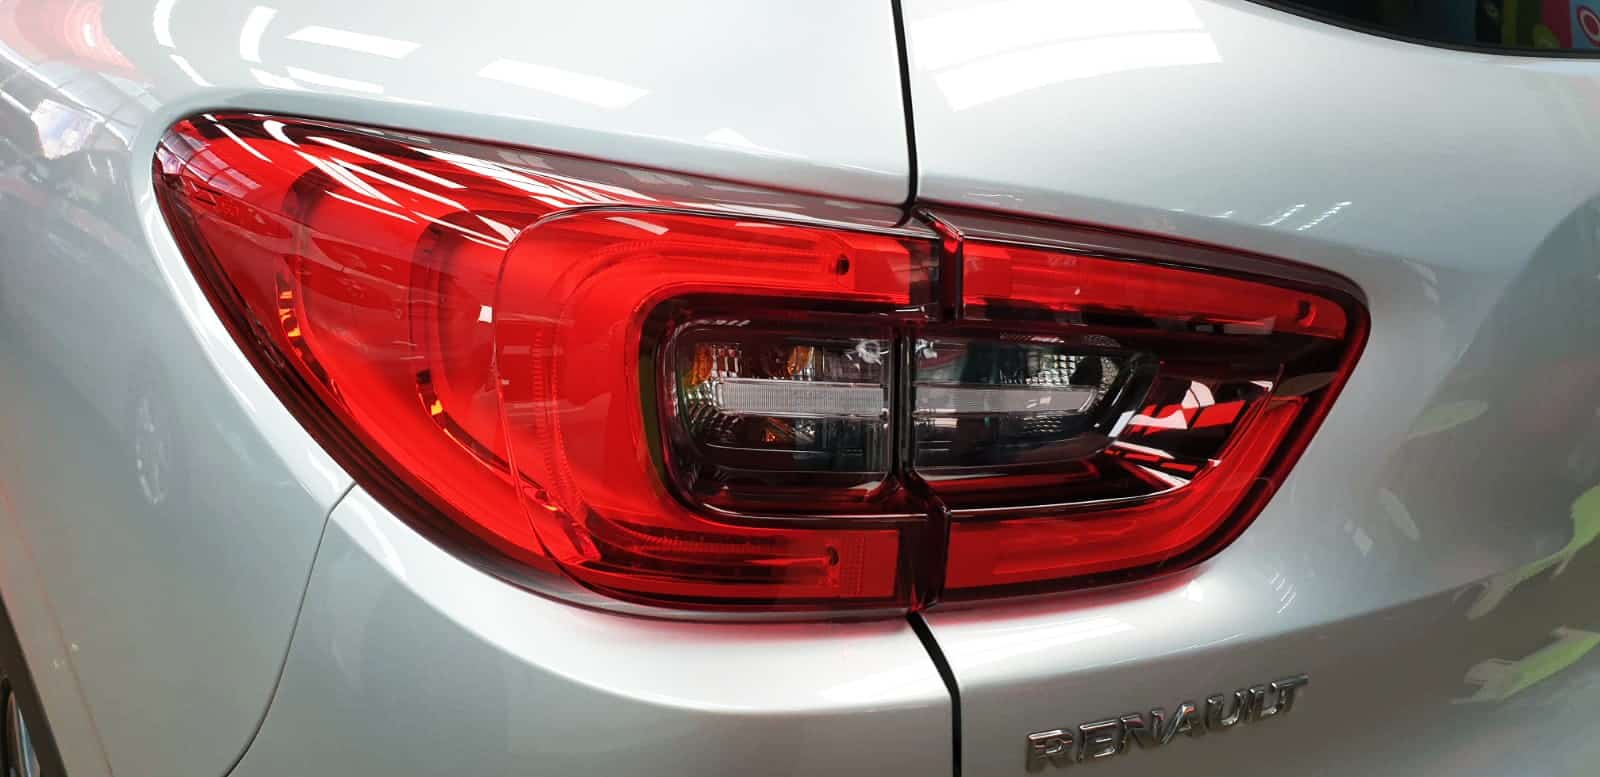 Stunning Renault Kadjar - headlight